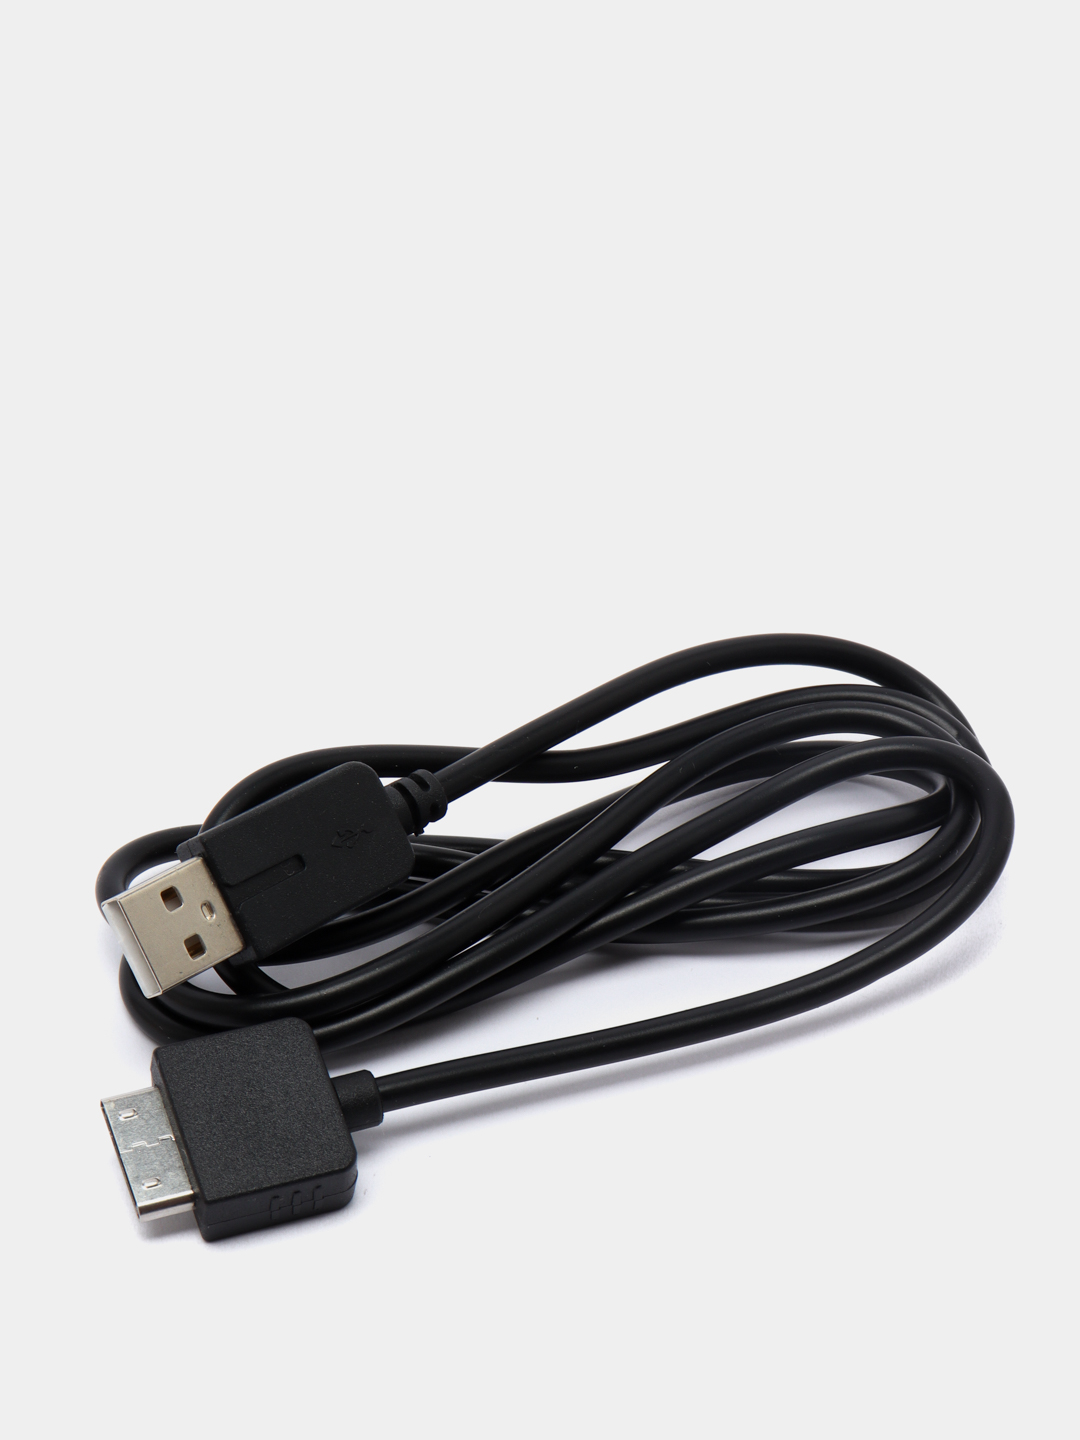 USB-кабель PSP PlayStation Portable GO